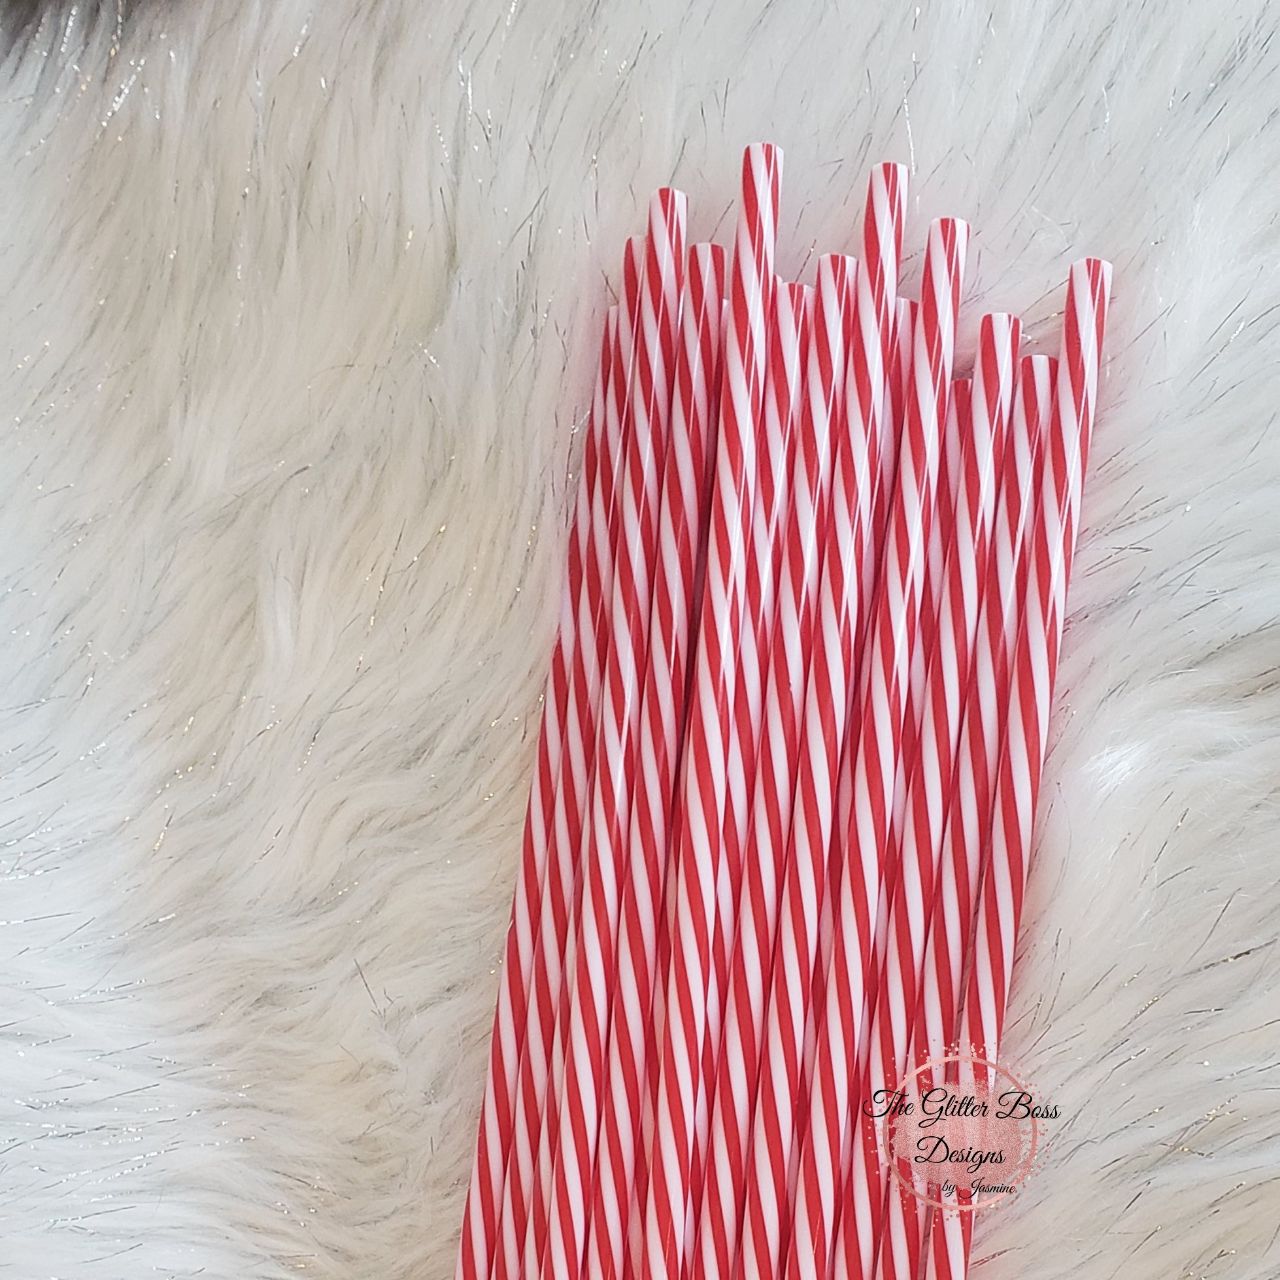 20 oz Plastic Straws - GBDesigns